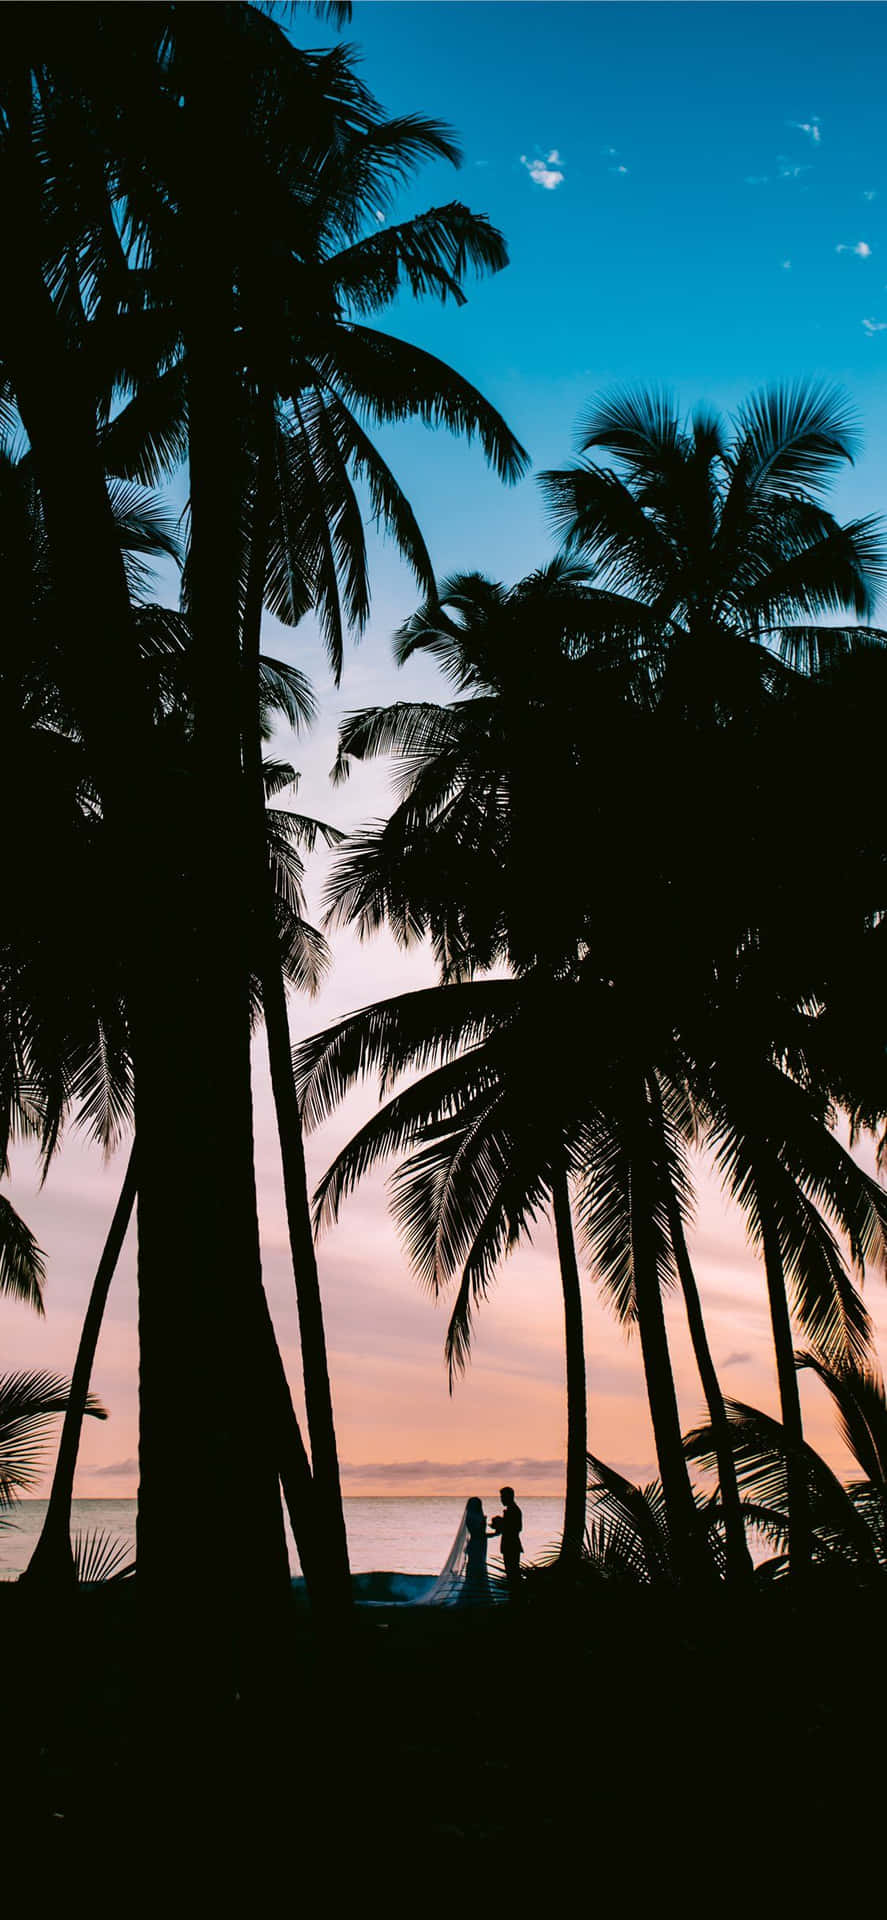 A Coconut Tree Against A Blue Sky Dramatically Set The Scene"